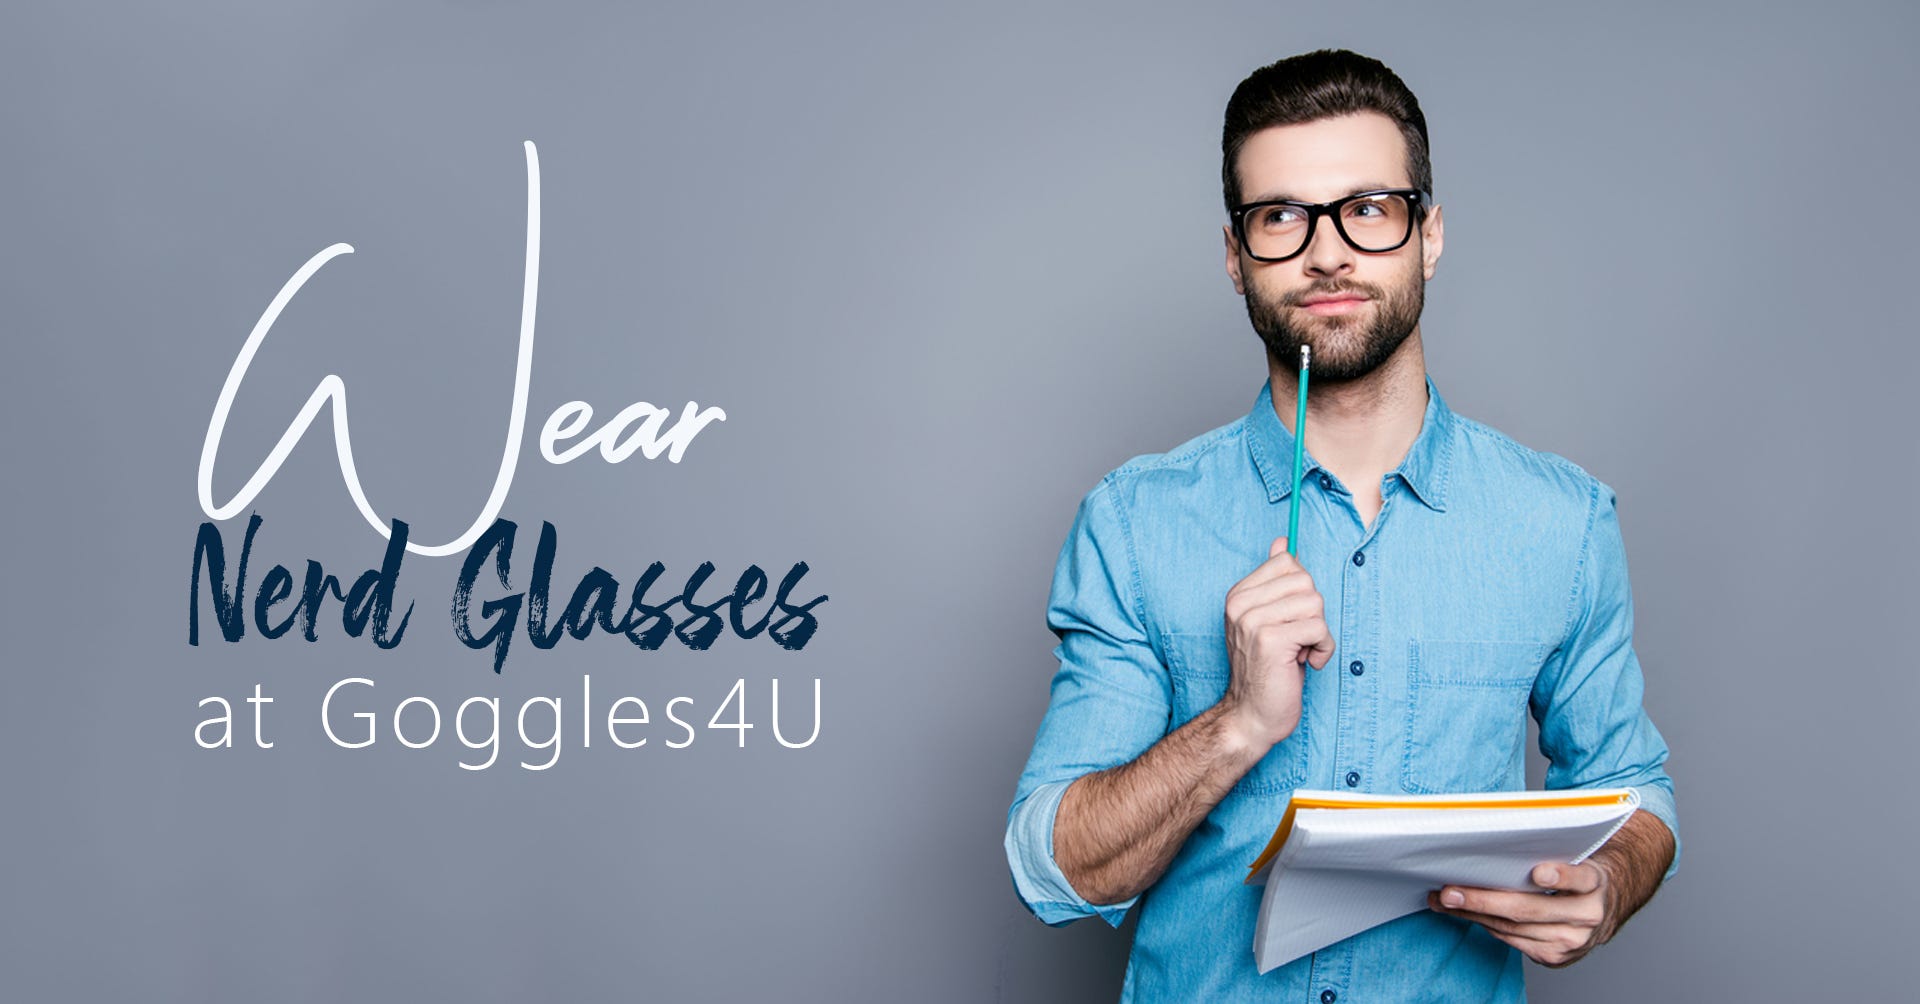 Get Nerd Glasses at Goggles4U: